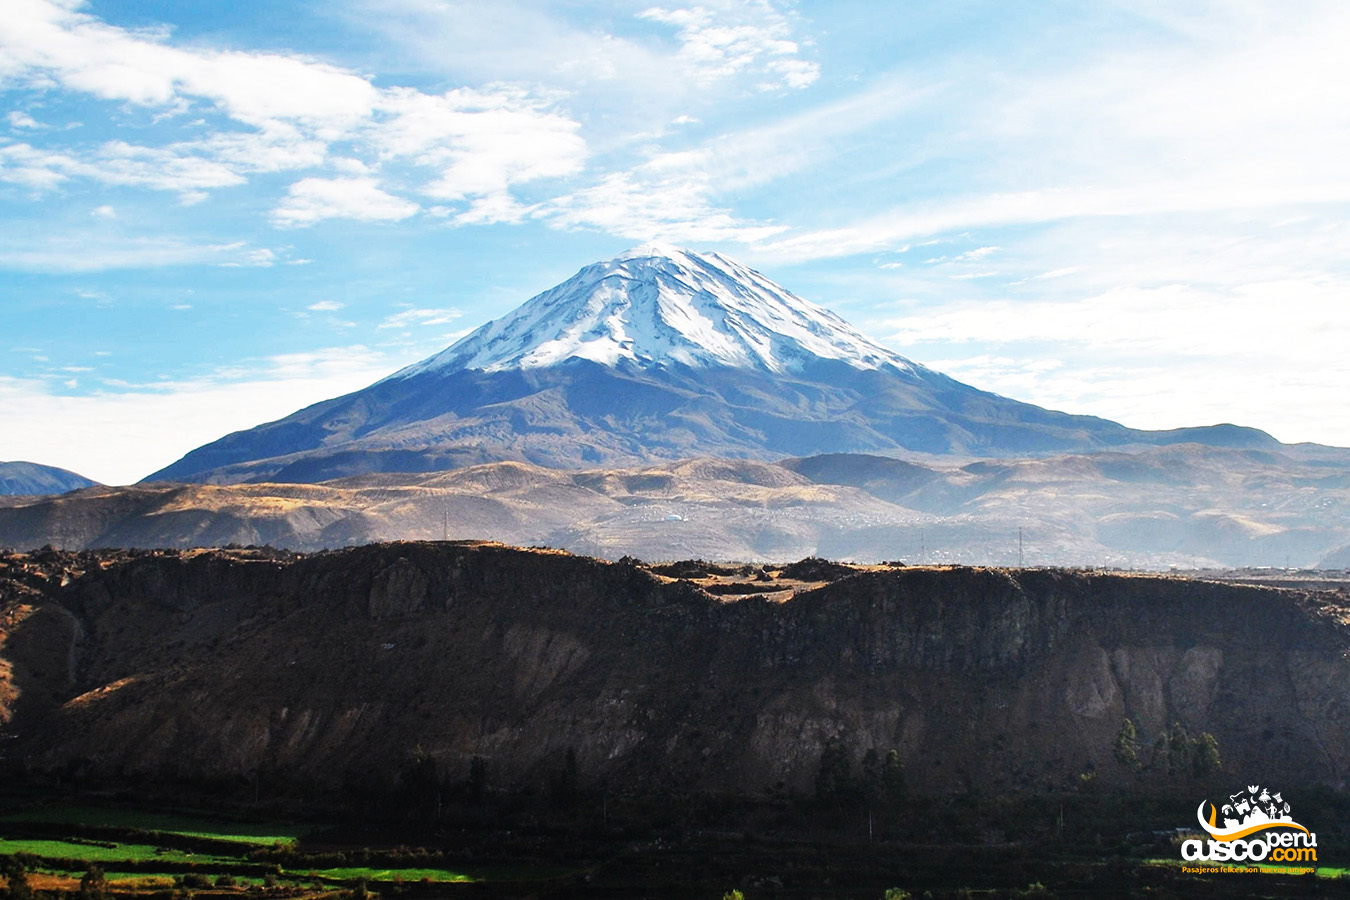  Volcán Misti en Arequipa. Fuente: CuscoPeru.com